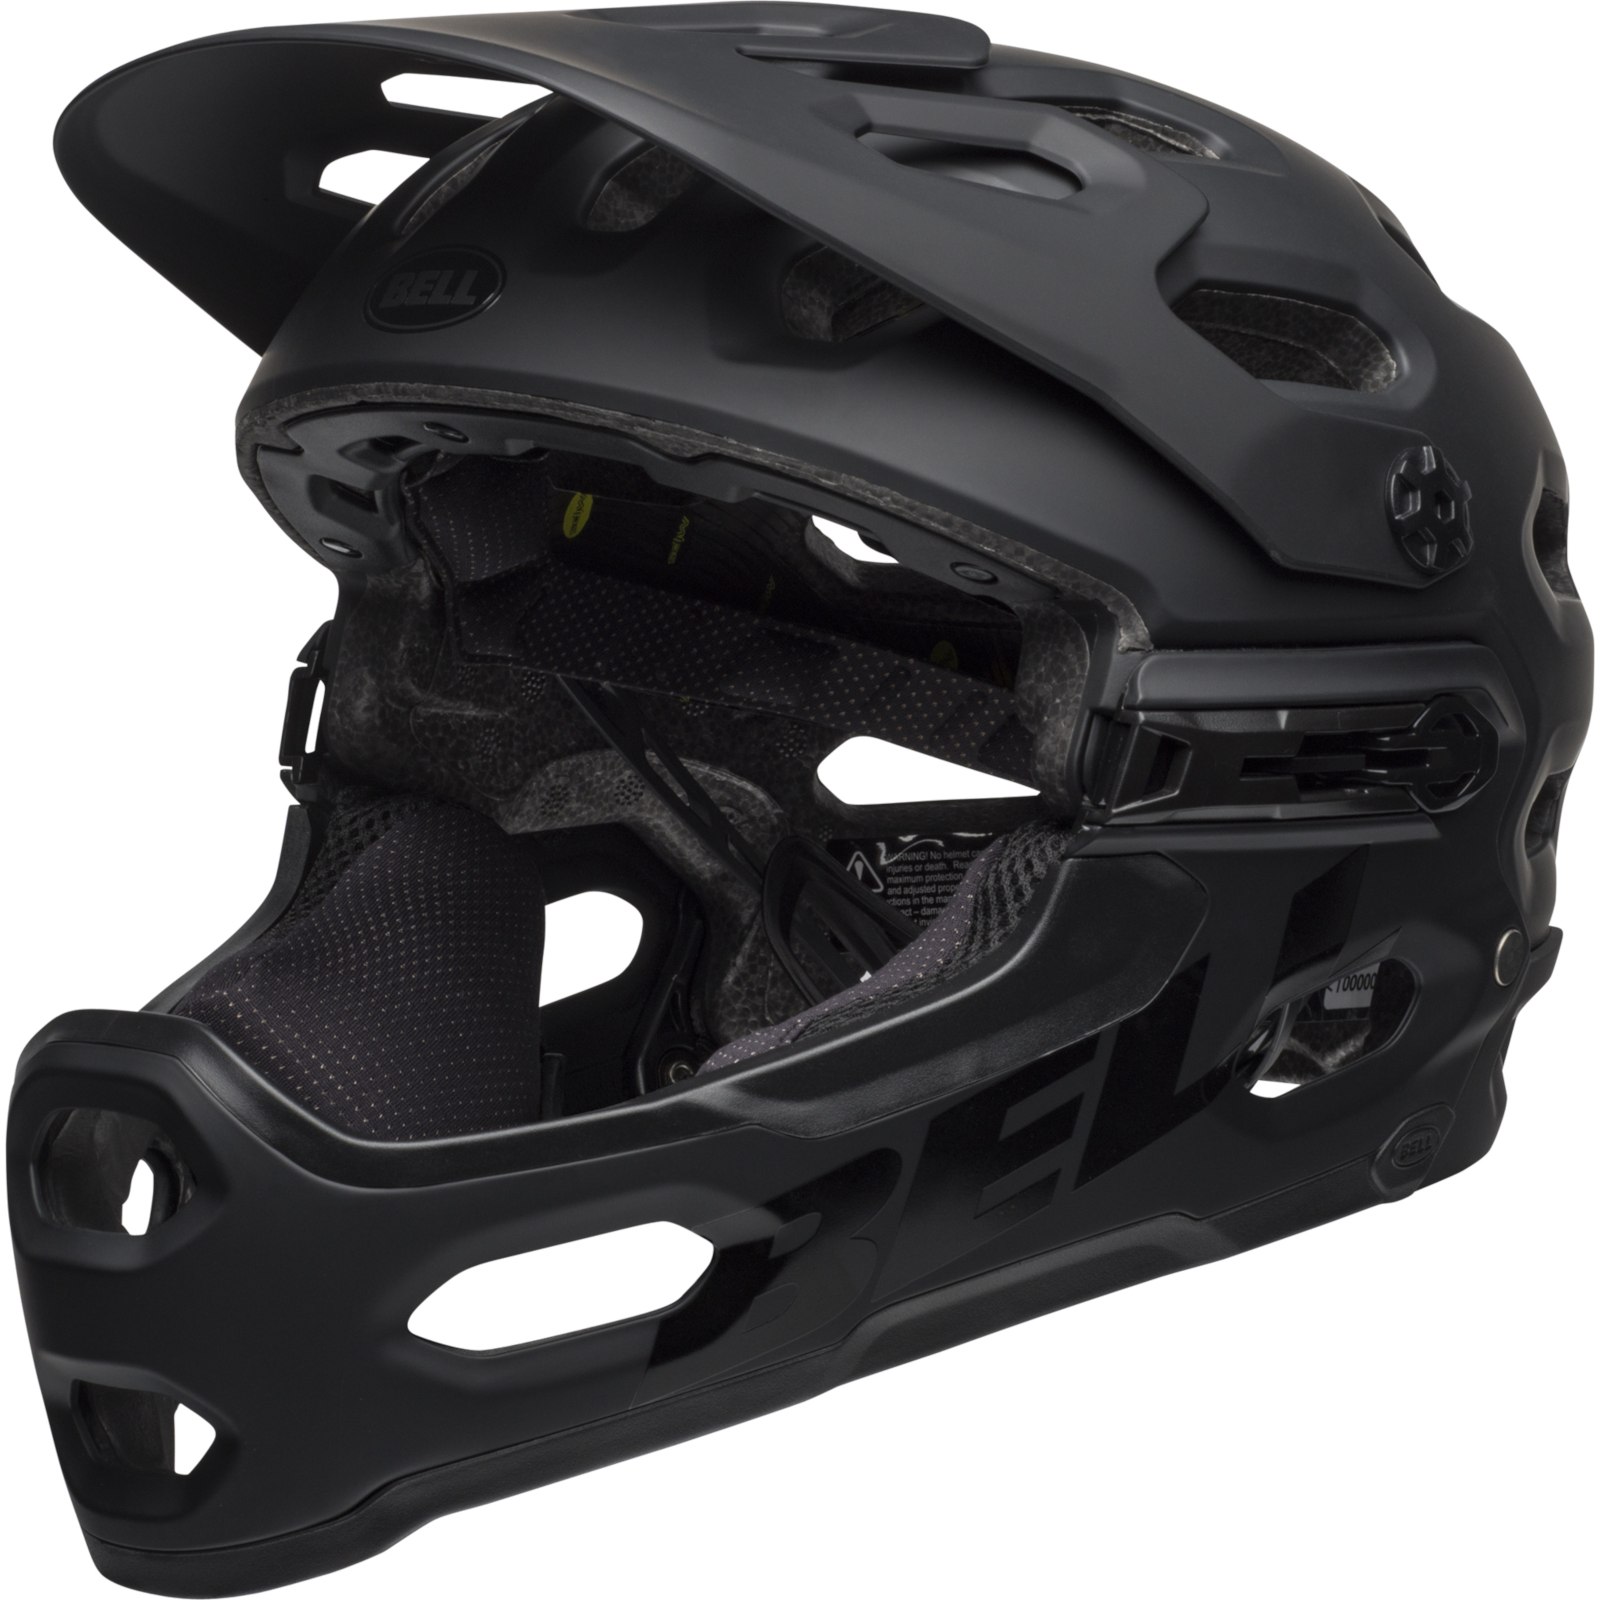 Image of Bell Super 3R MIPS Helmet - matte black/gray